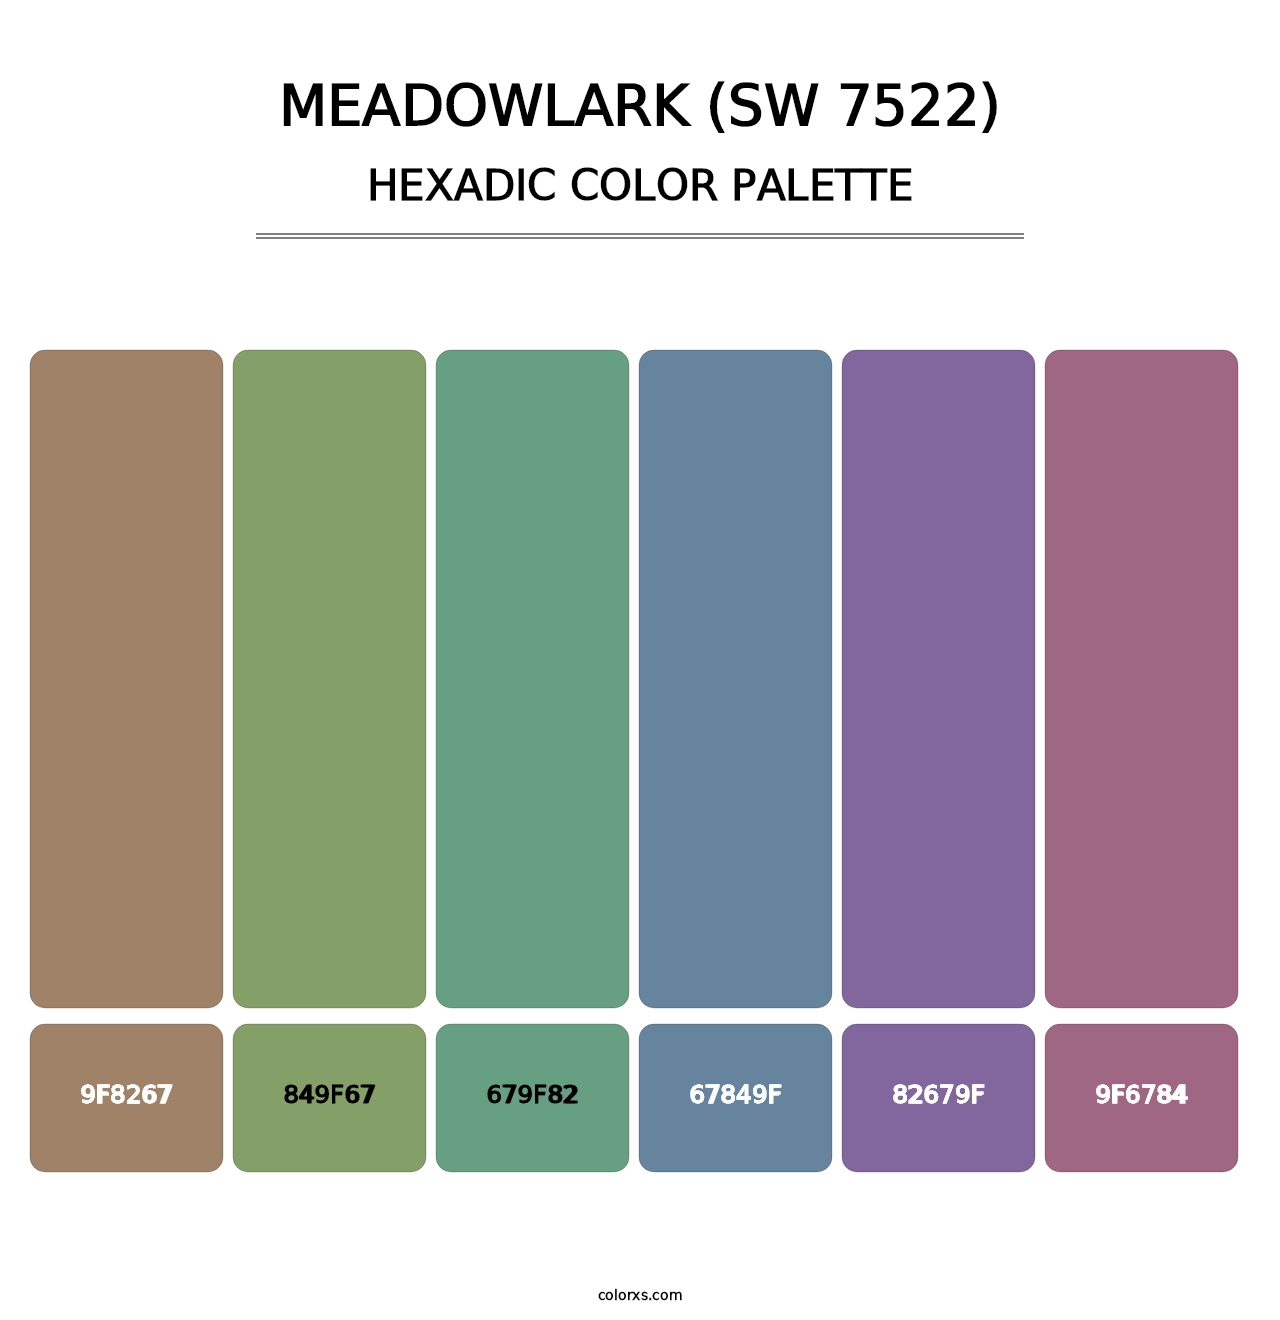 Meadowlark (SW 7522) - Hexadic Color Palette